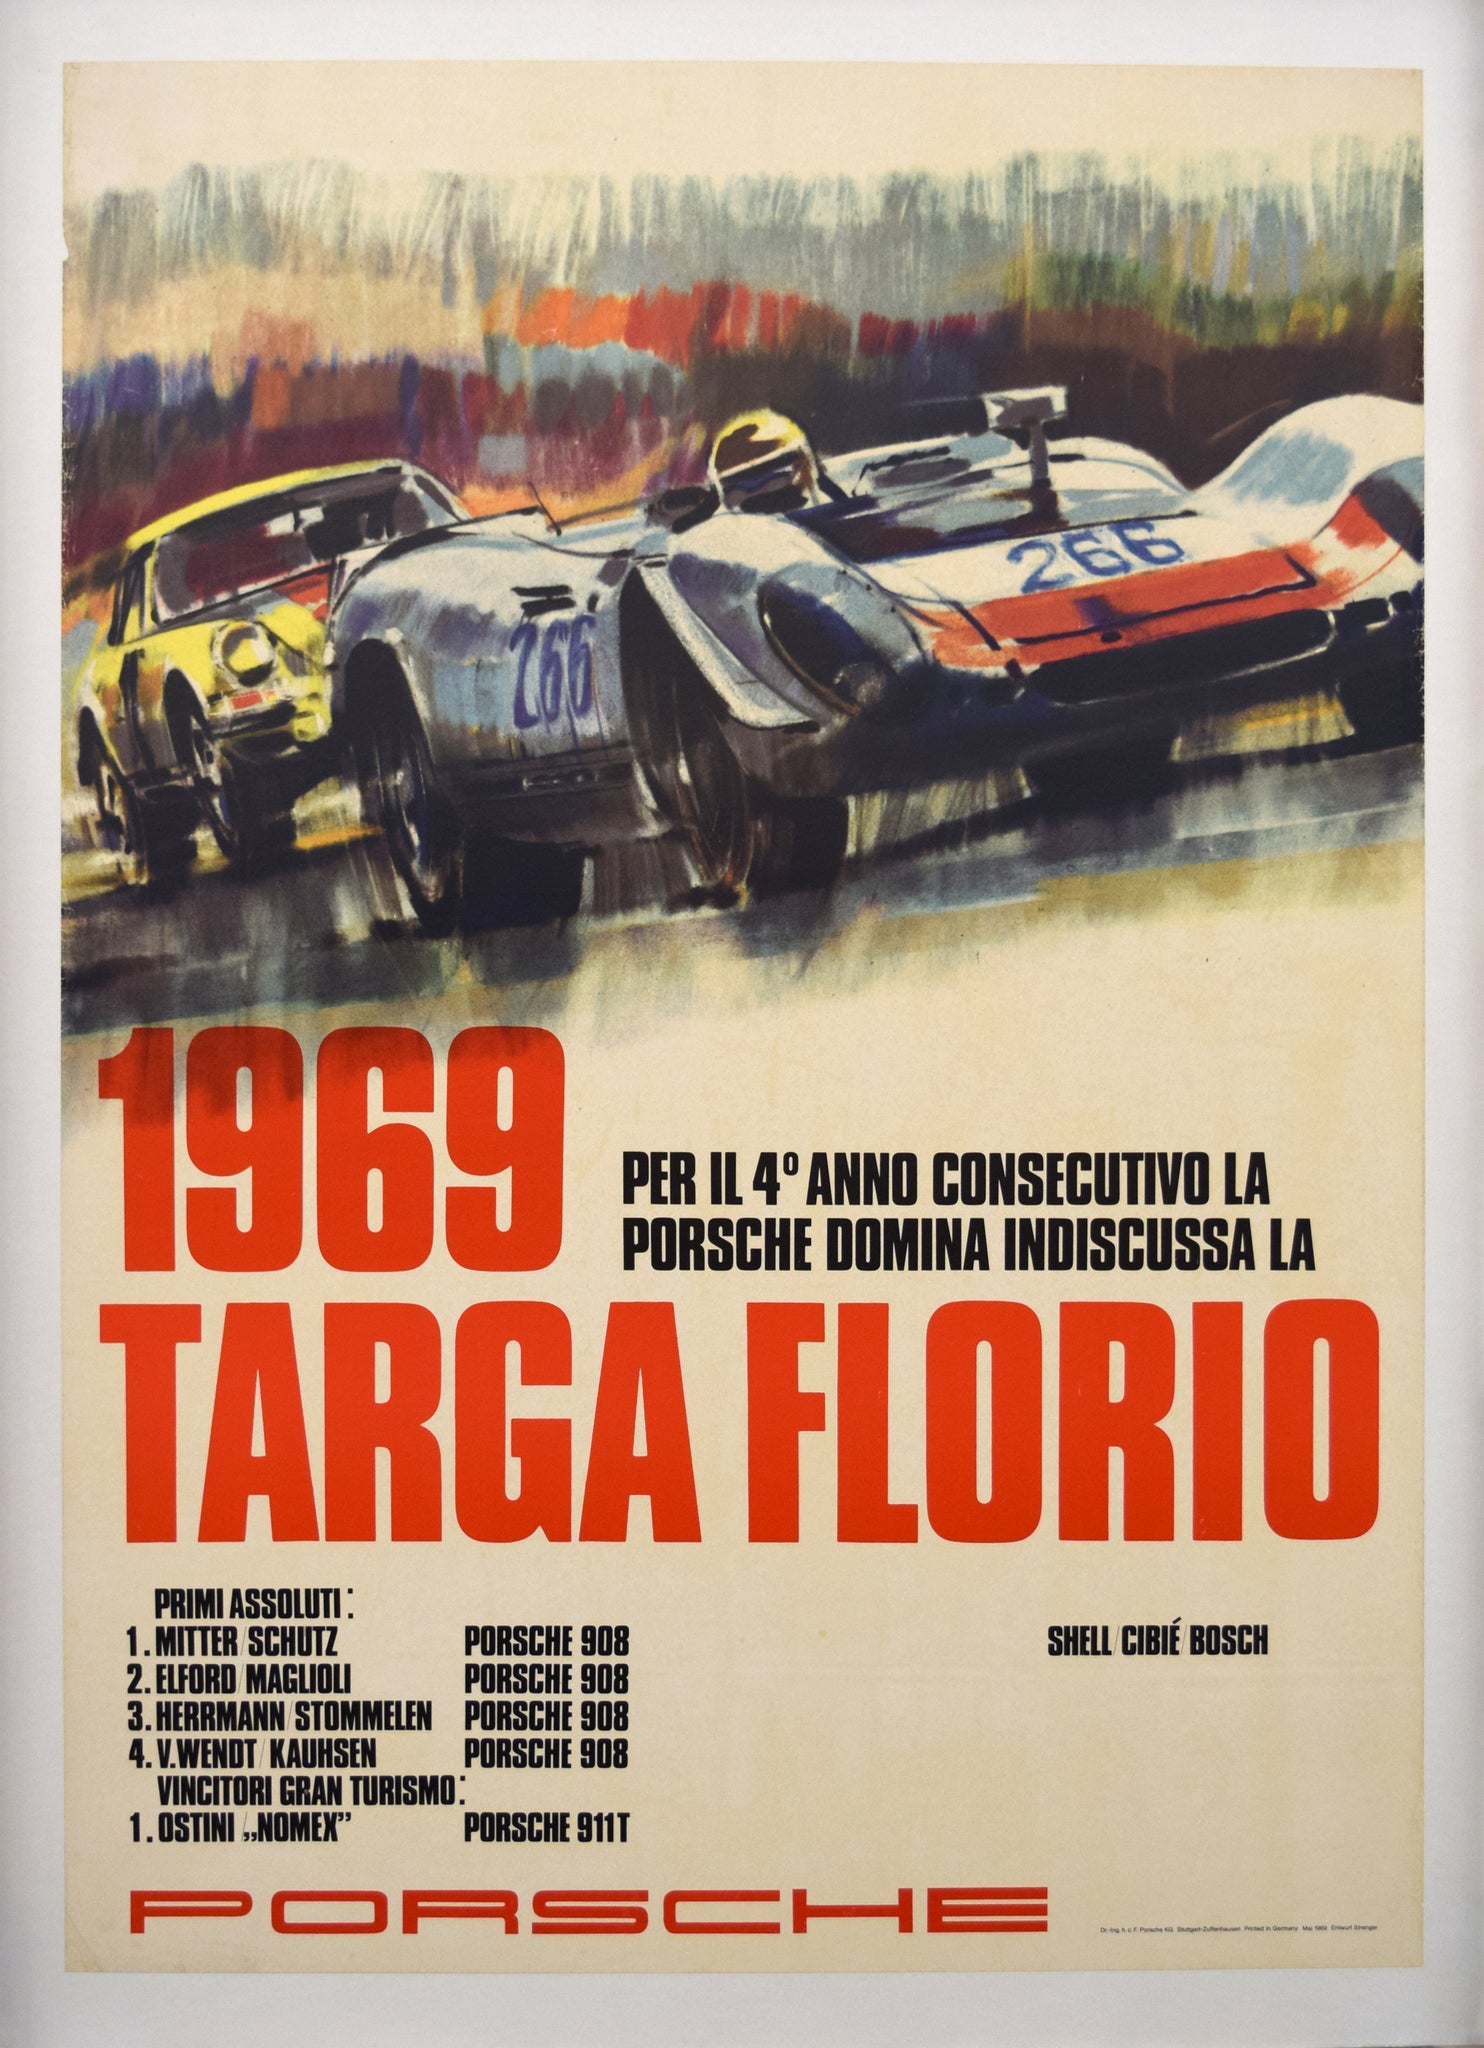 1969 Targa Florio Poster | 1969 Targa Florio | Vintage Car Posters